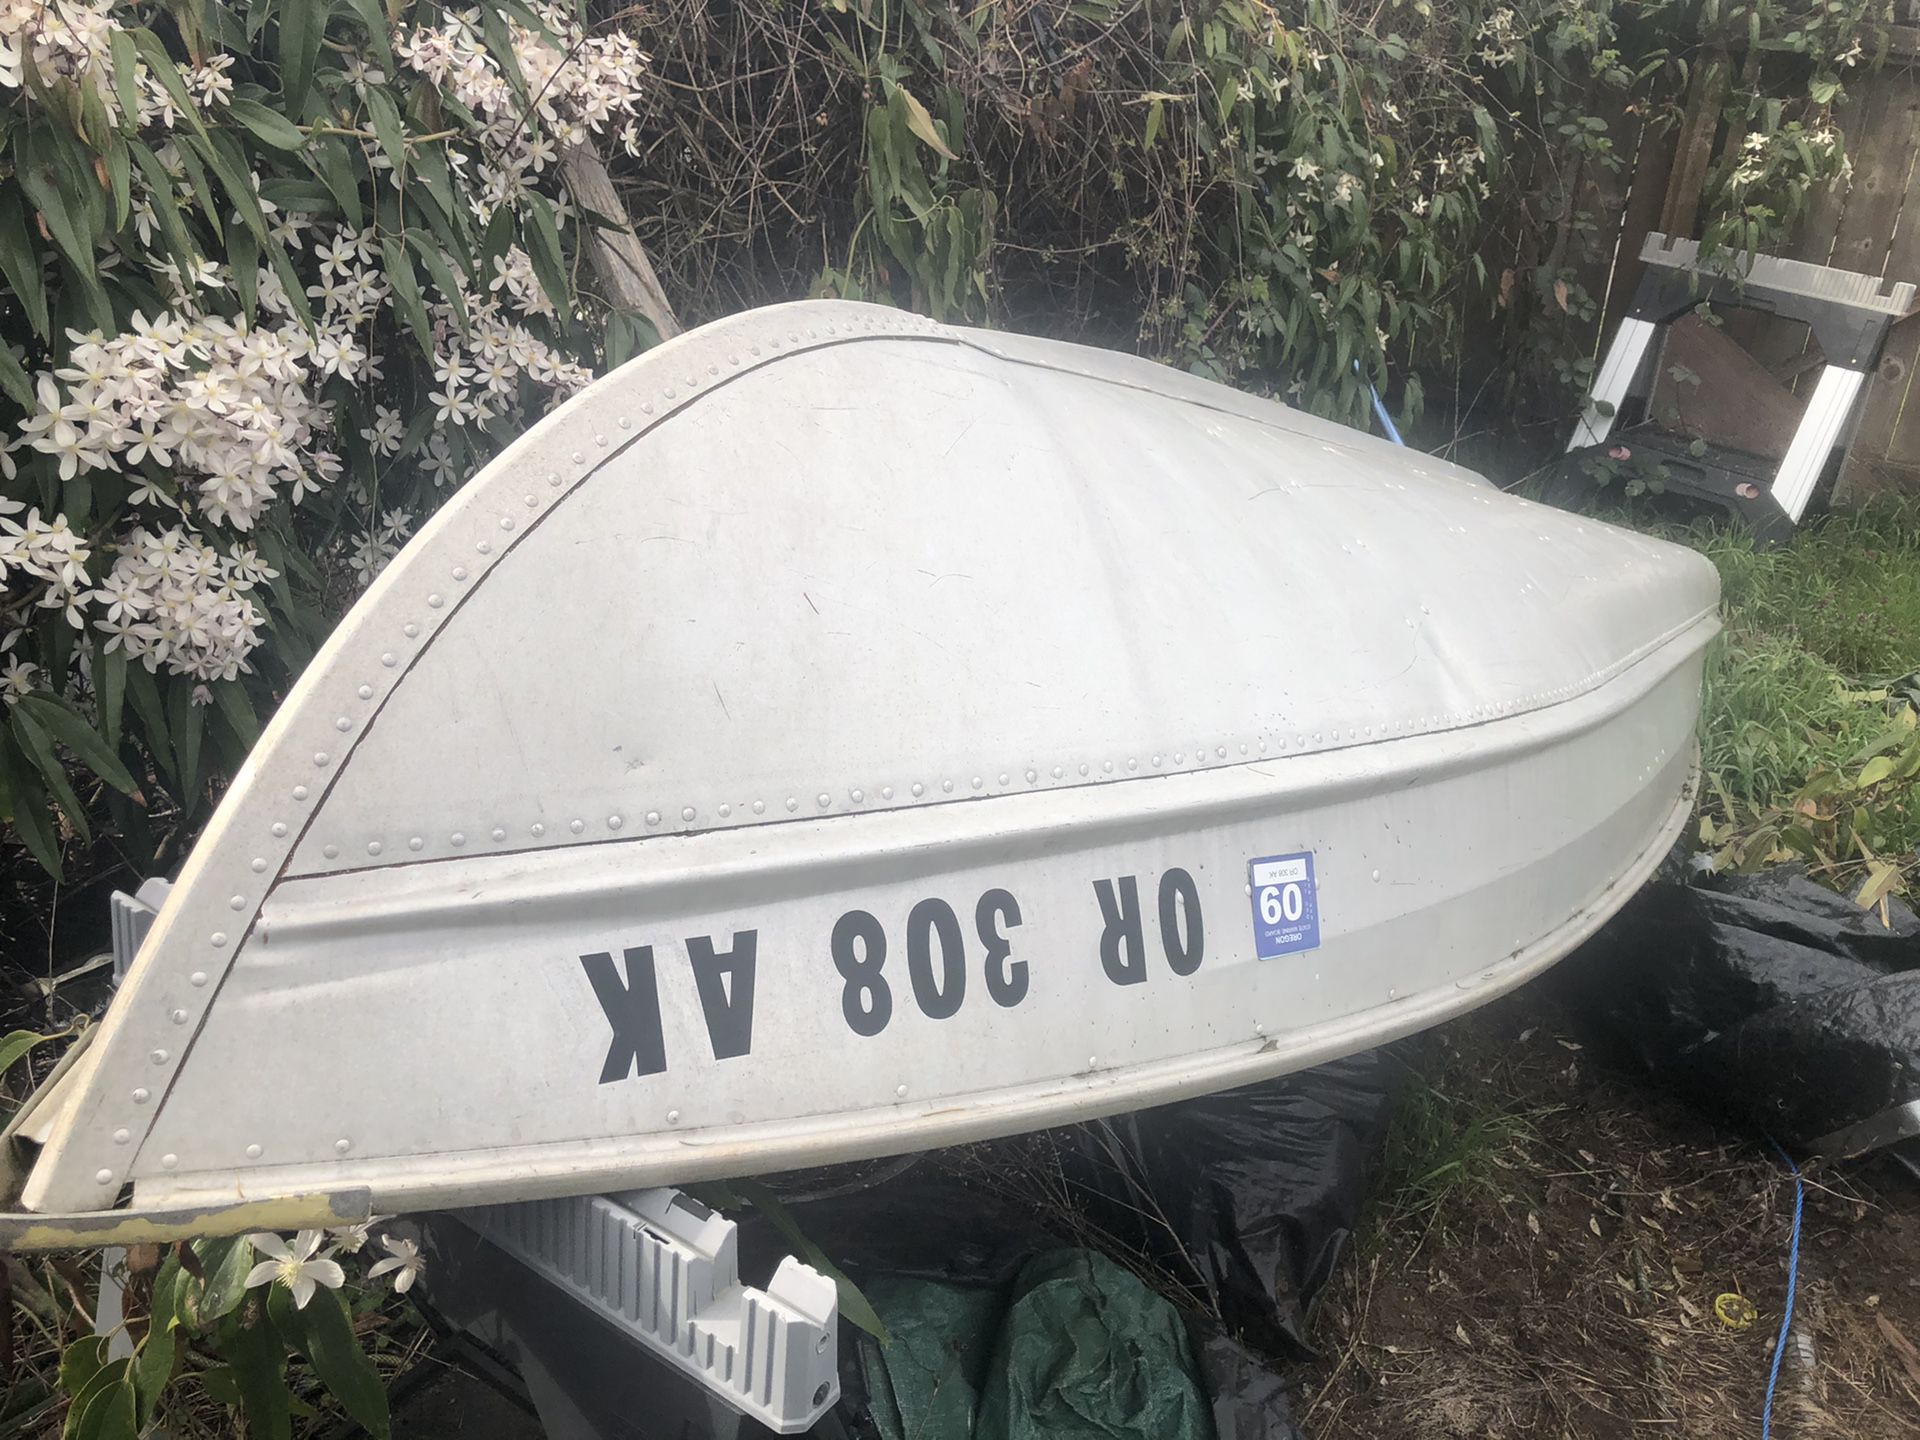 Aluminum Boat for sale 14 ft. Good shape no leaks $1400